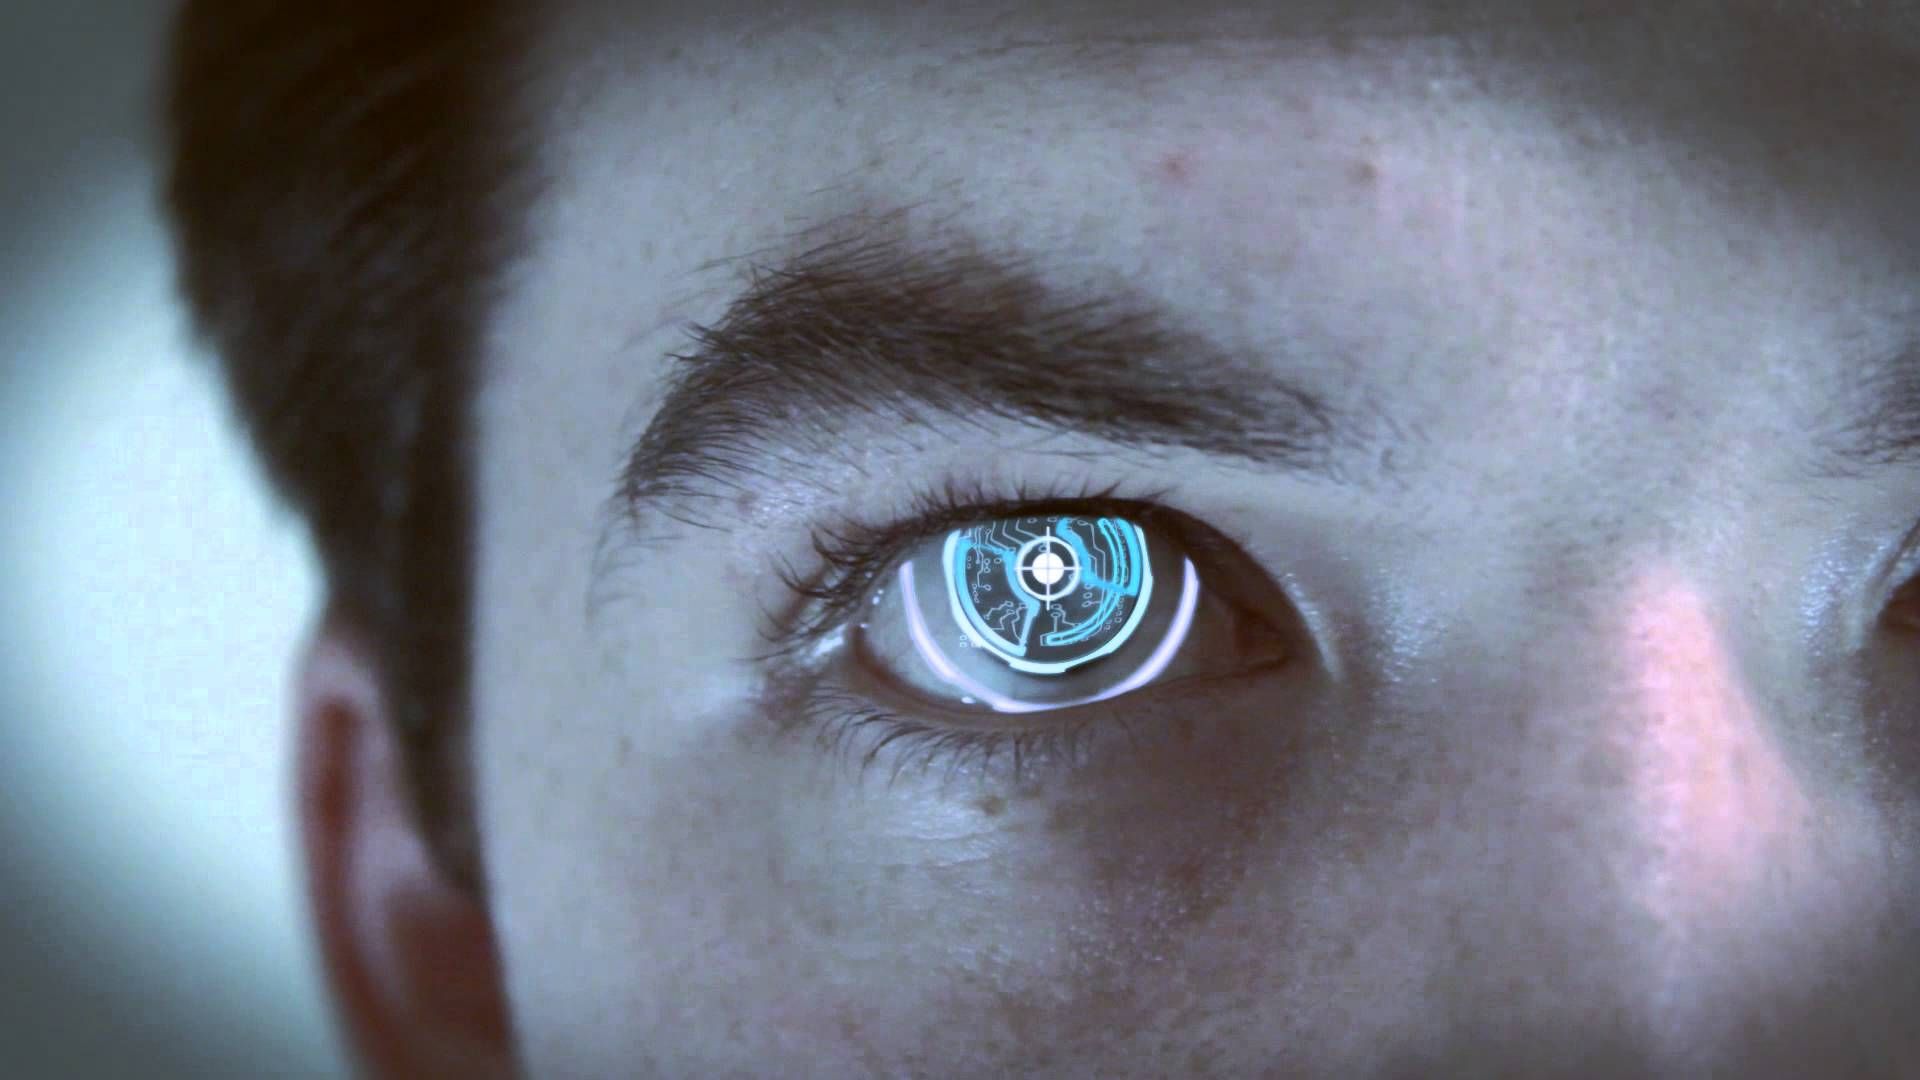 cyborg eye - Google Search | Cyberpunk/Cyborg | Pinterest